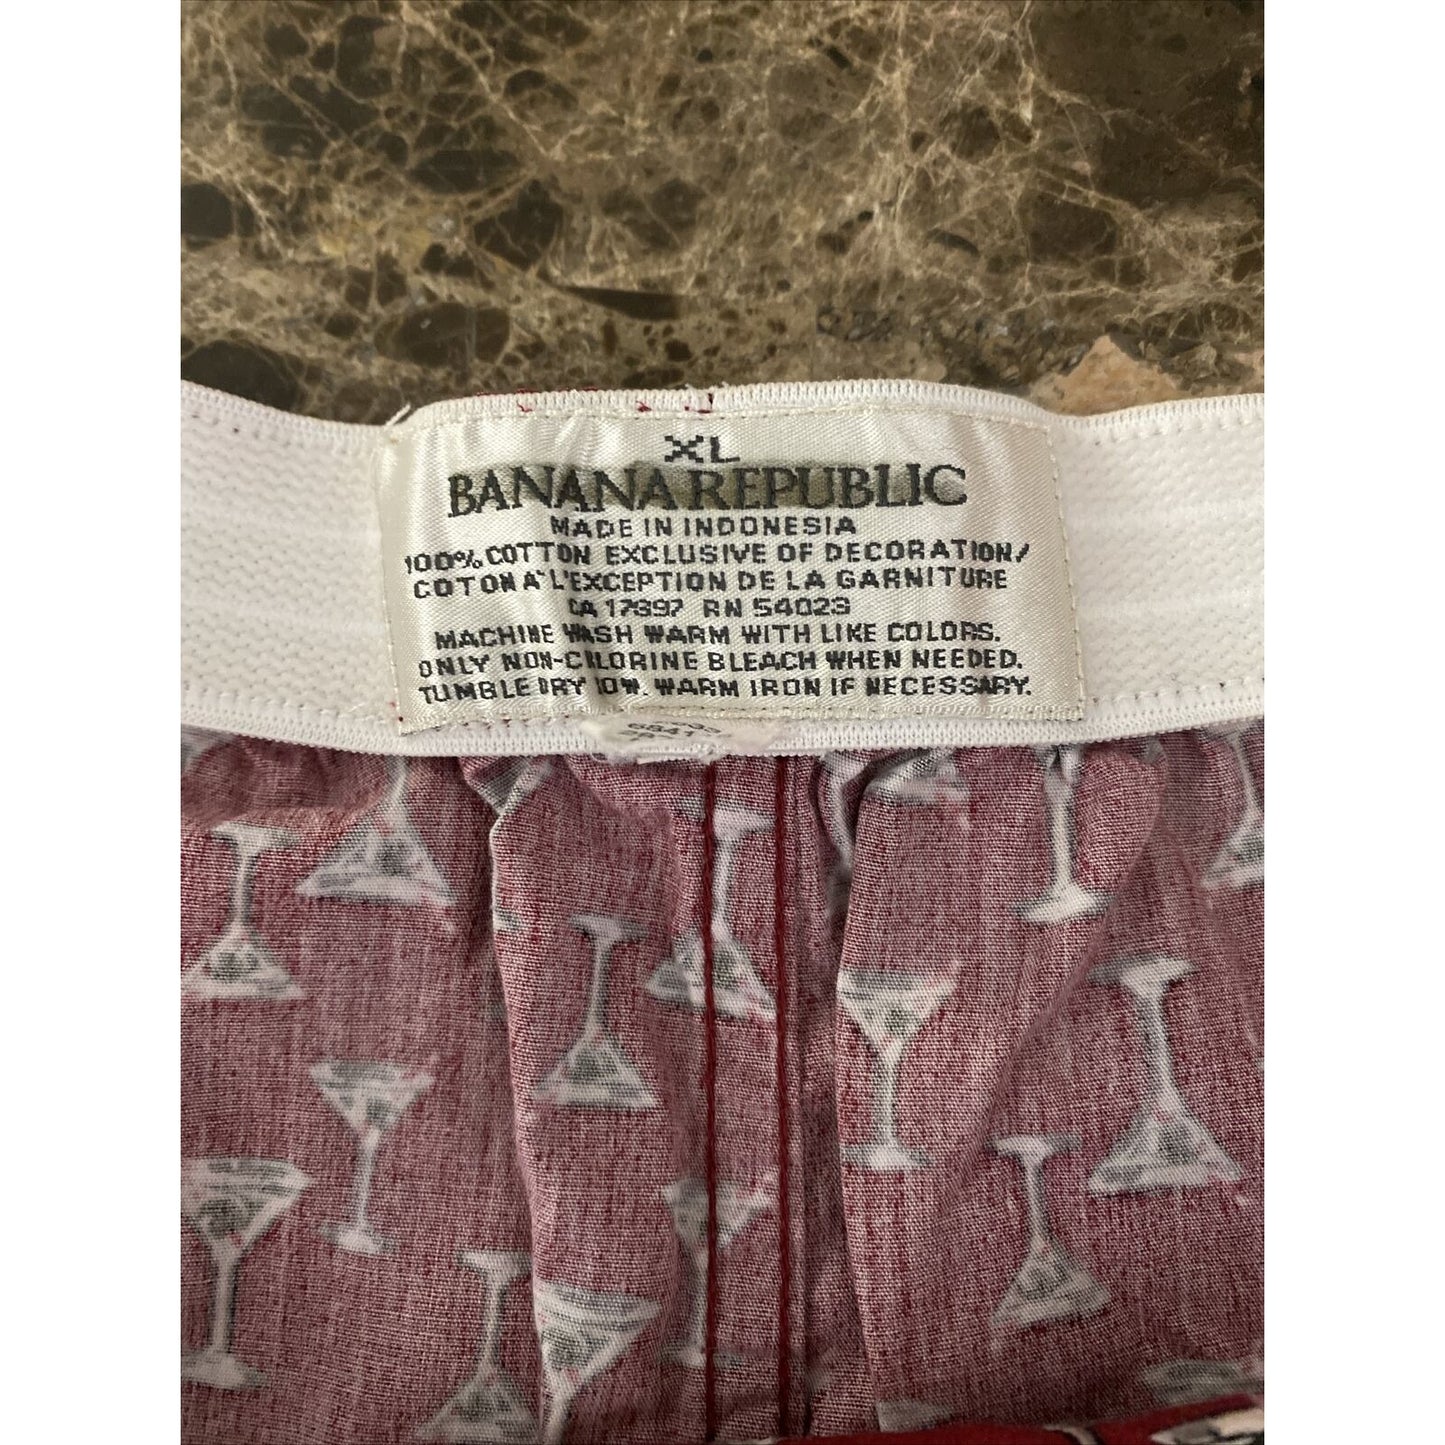 Banana Republic Men’s XL Red Martini Glass Pattern 100% Cotton Boxer Shorts New